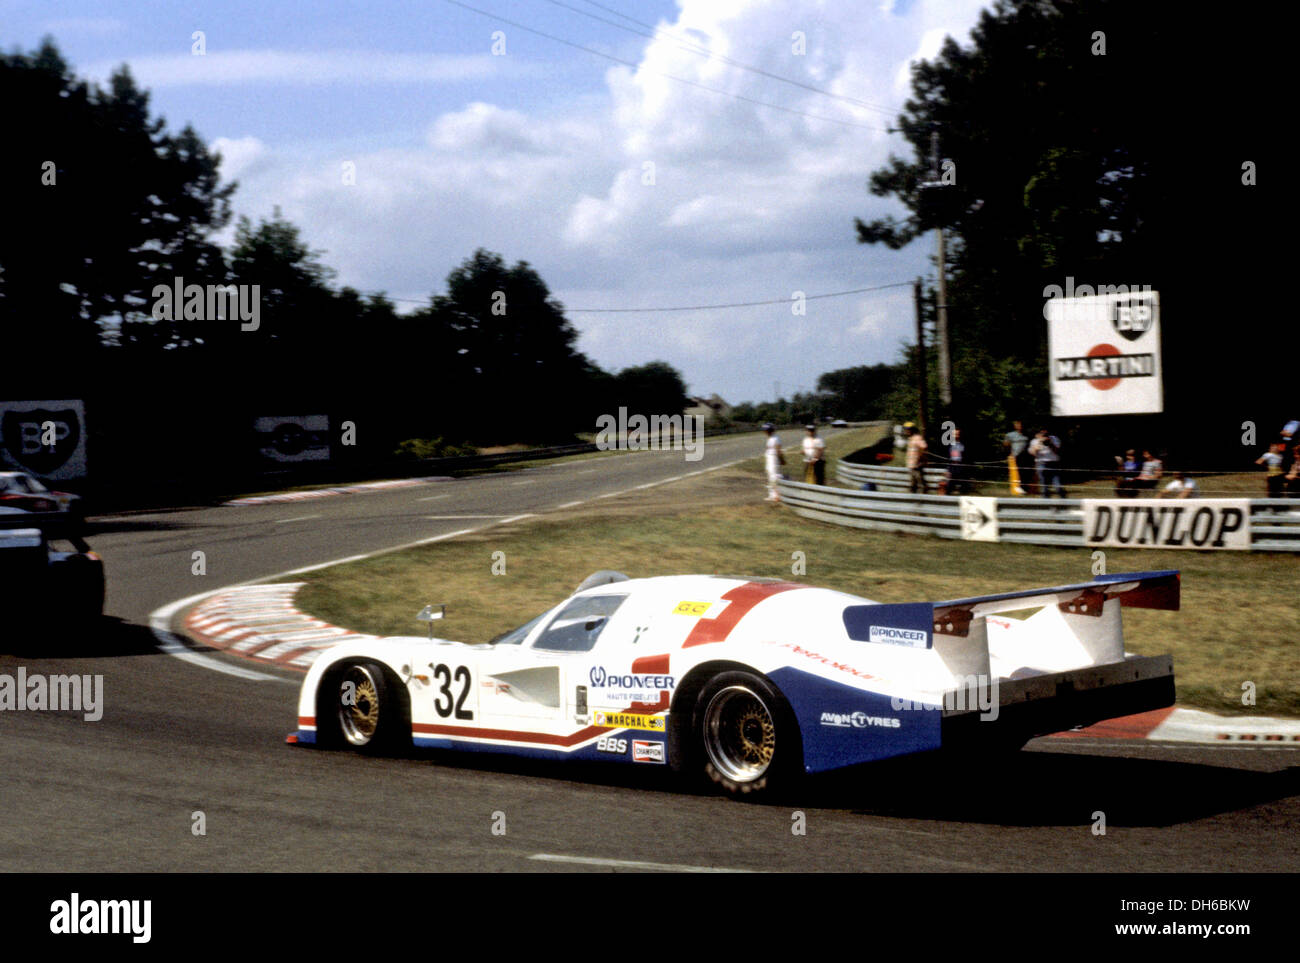 Ray Mallock-Mike du saumon Nimrod Aston Martin Racing au Mans, France 1982. Banque D'Images